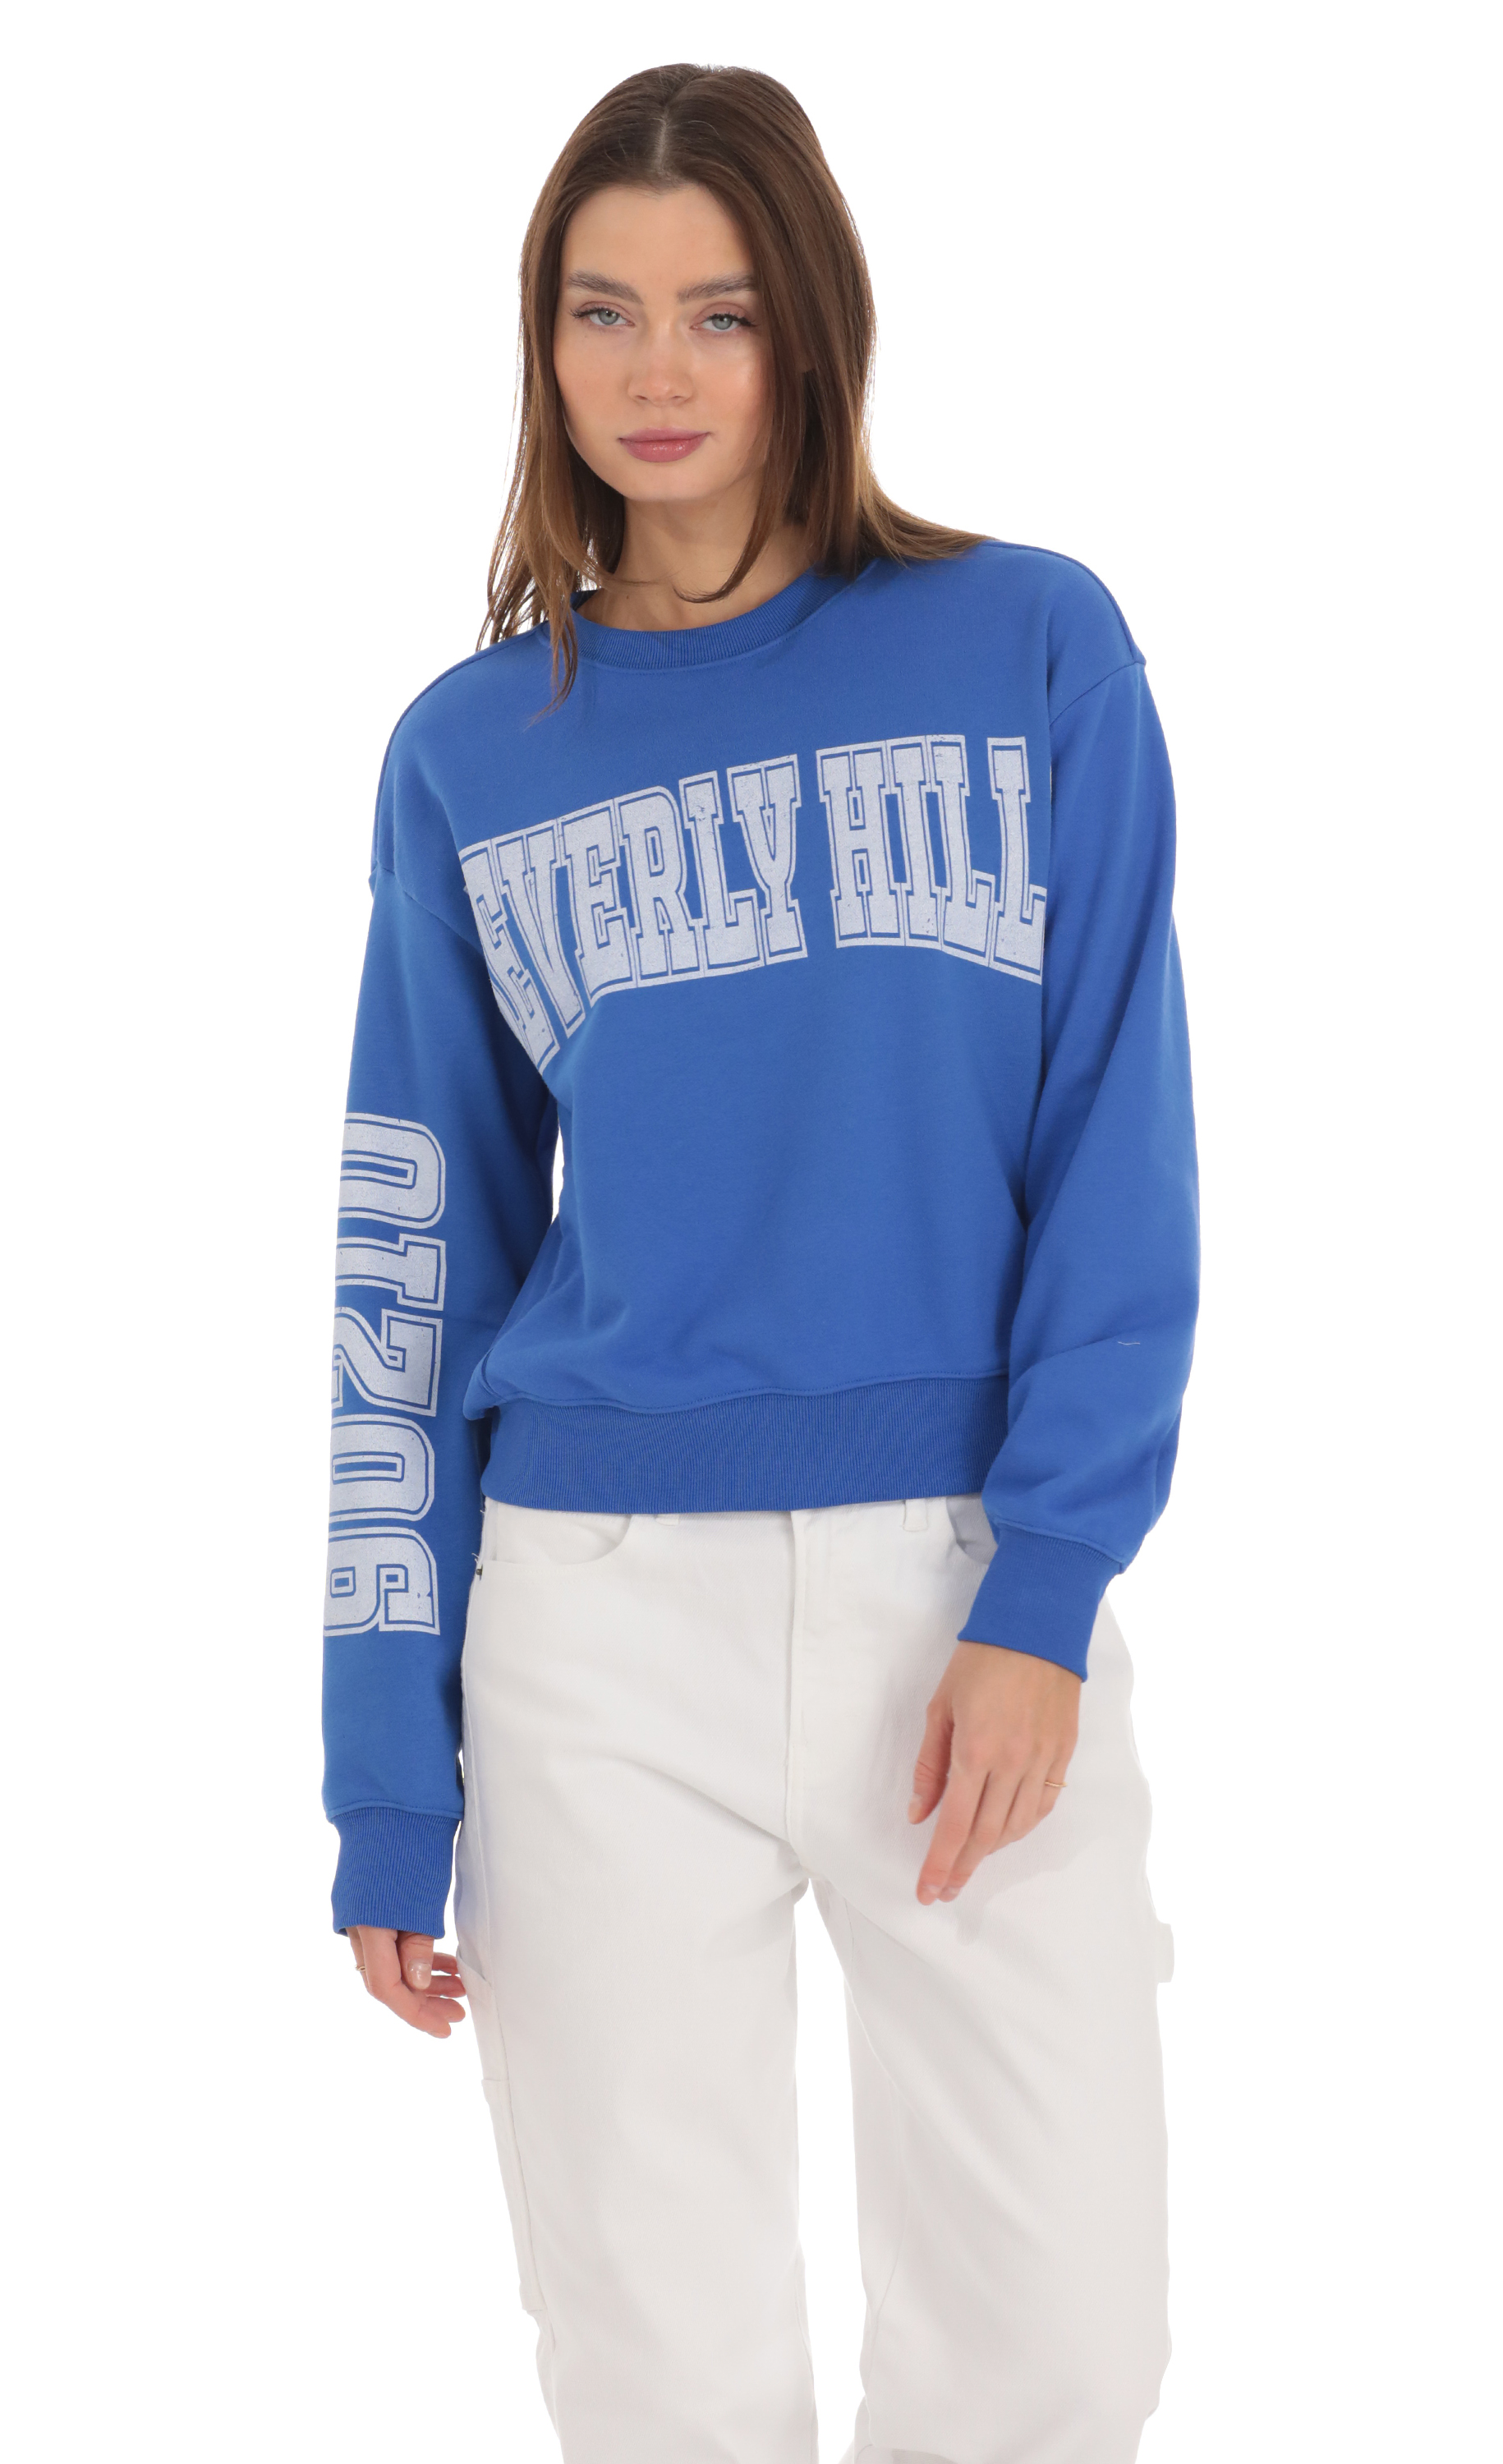 Beverly Hills 90210 Jumper in Blue